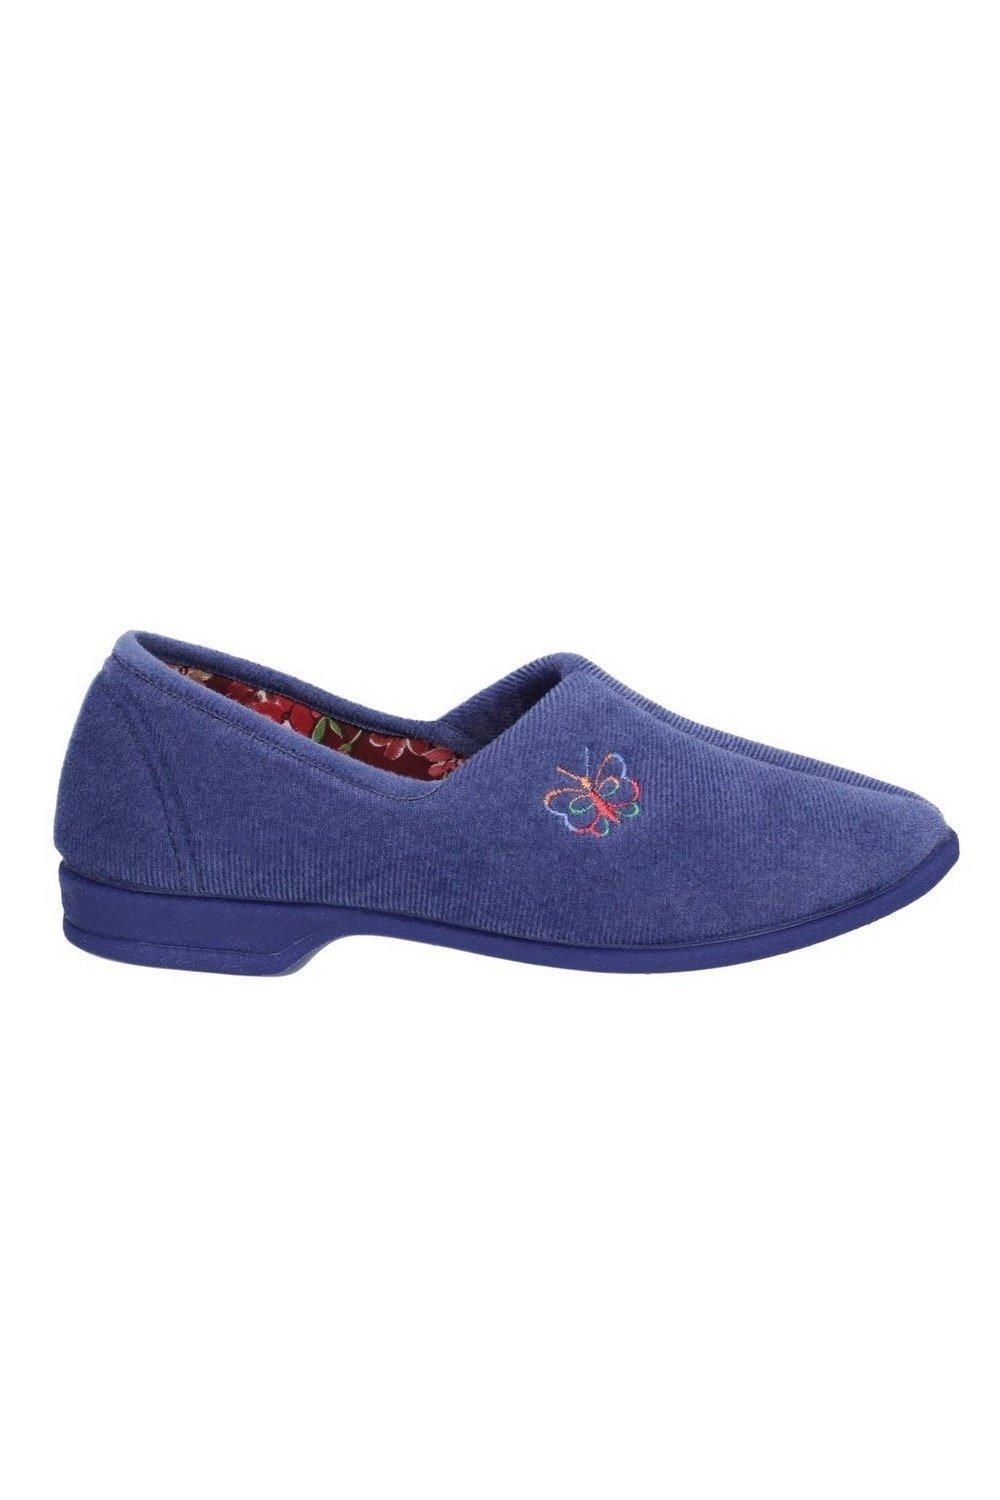 Mirak  Bouquet / Ladies Slipper / Classic Womens Slippers (7 UK) (Blueberry)